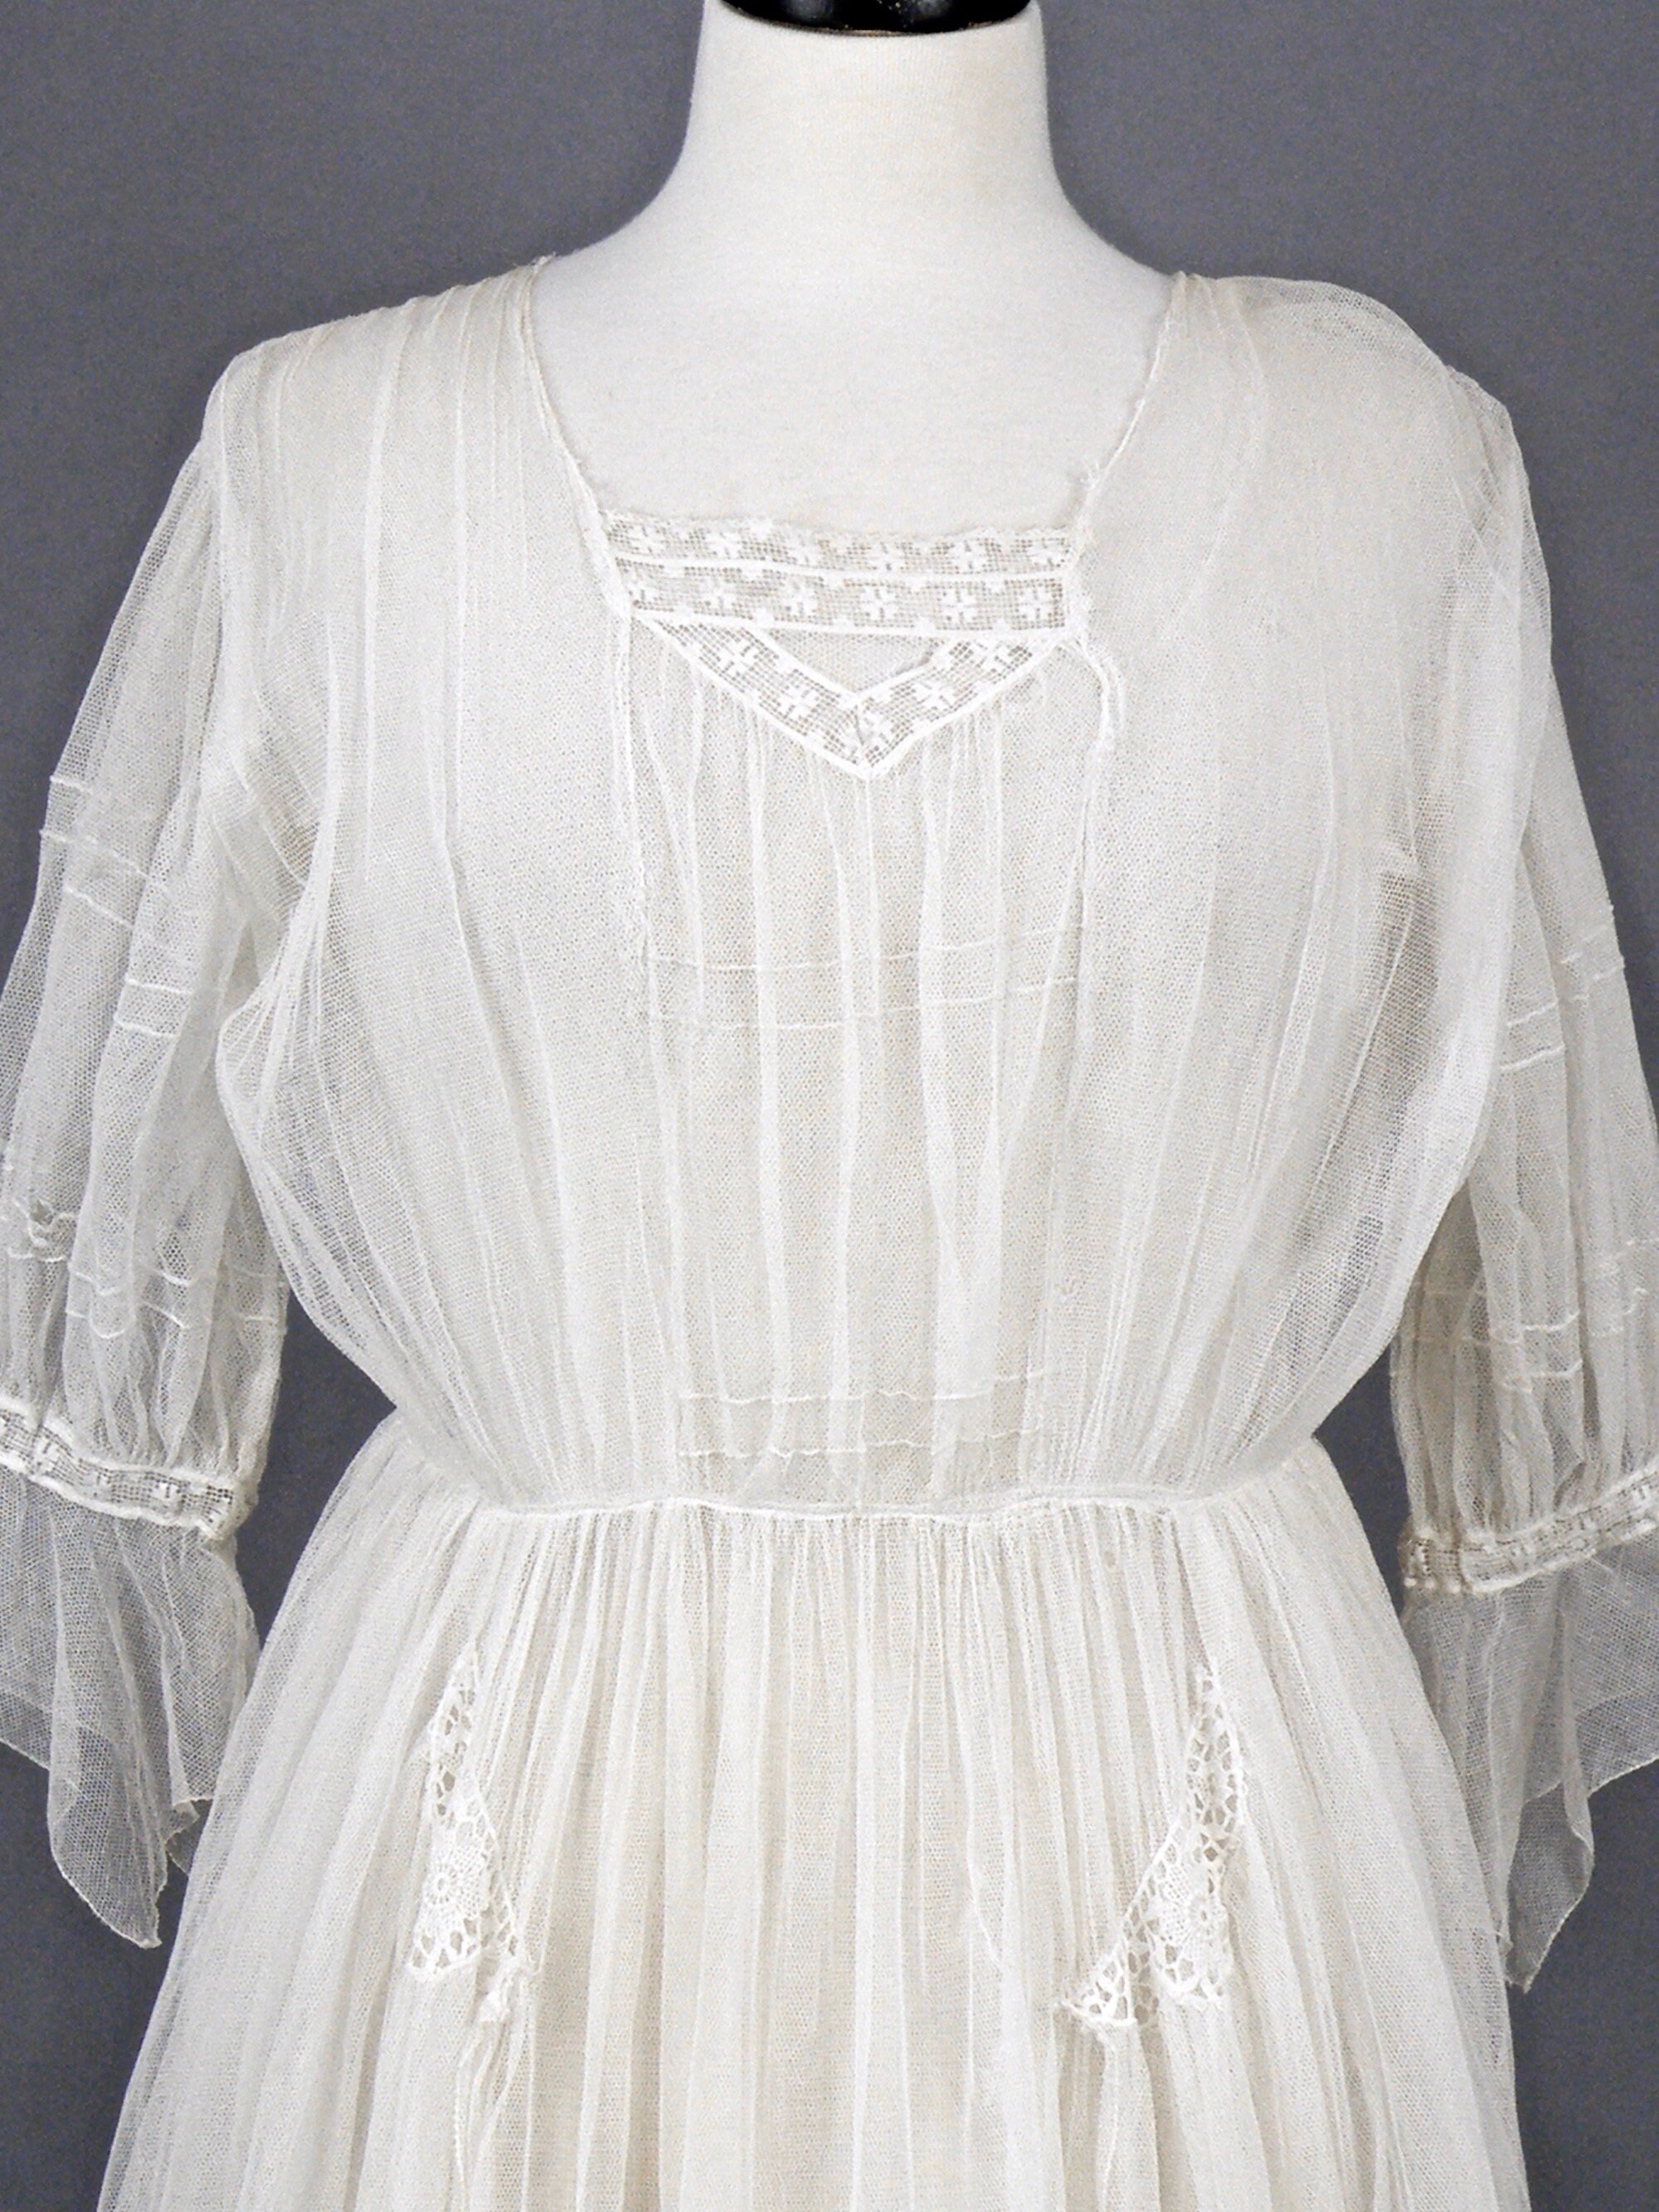 Edwardian Dress, 1910s White Net Lace Bohemian Peasant Dress, Medium